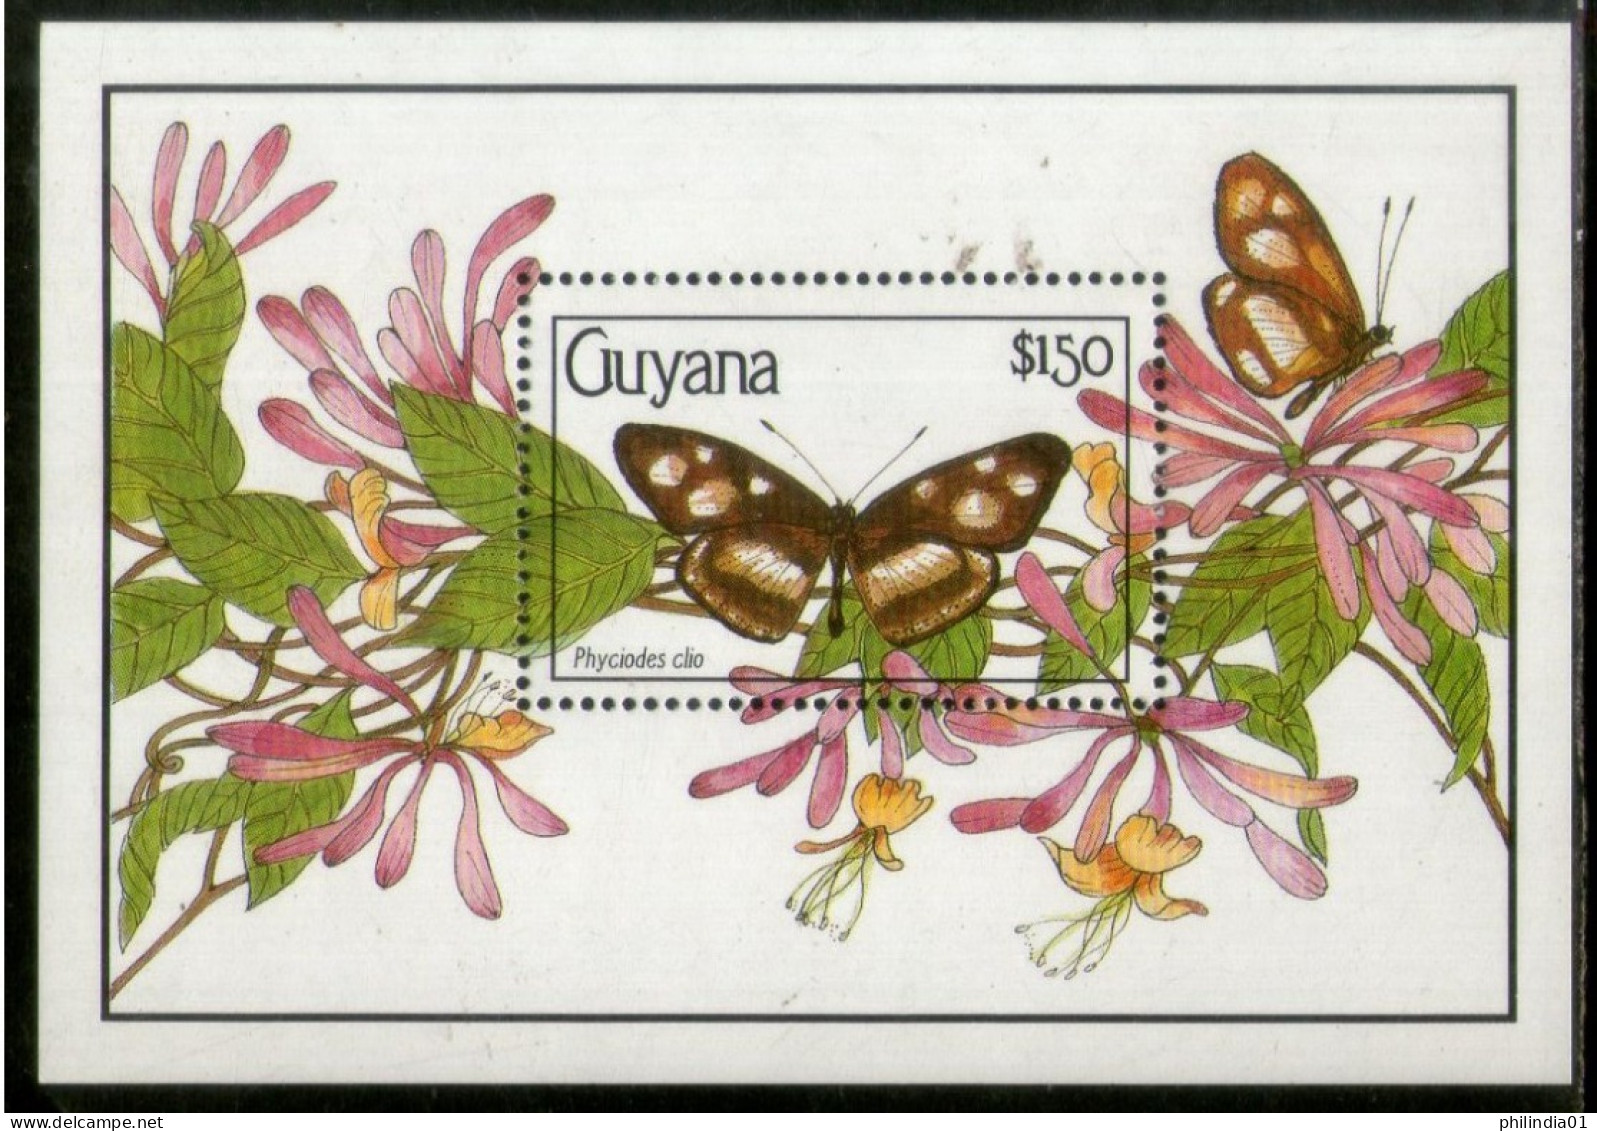 Guyana 1990 Butterflies Moth Insect Sc 2345 M/s MNH # 1860 - Vlinders